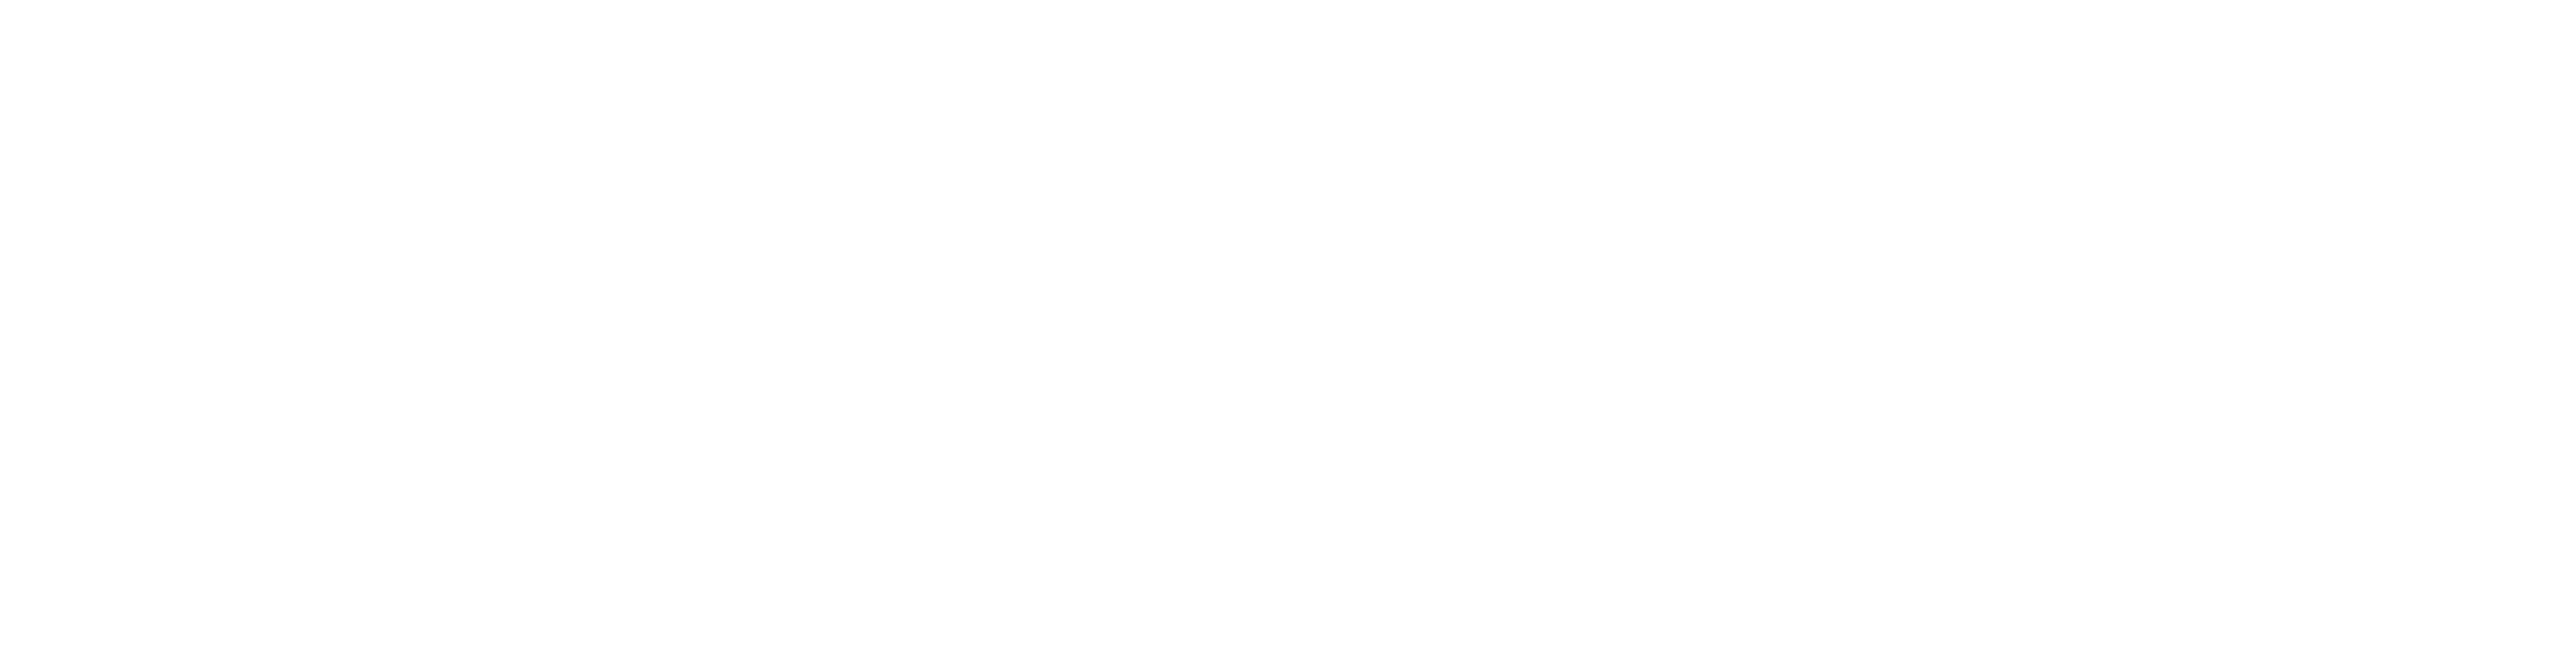 Klenk Realty Team